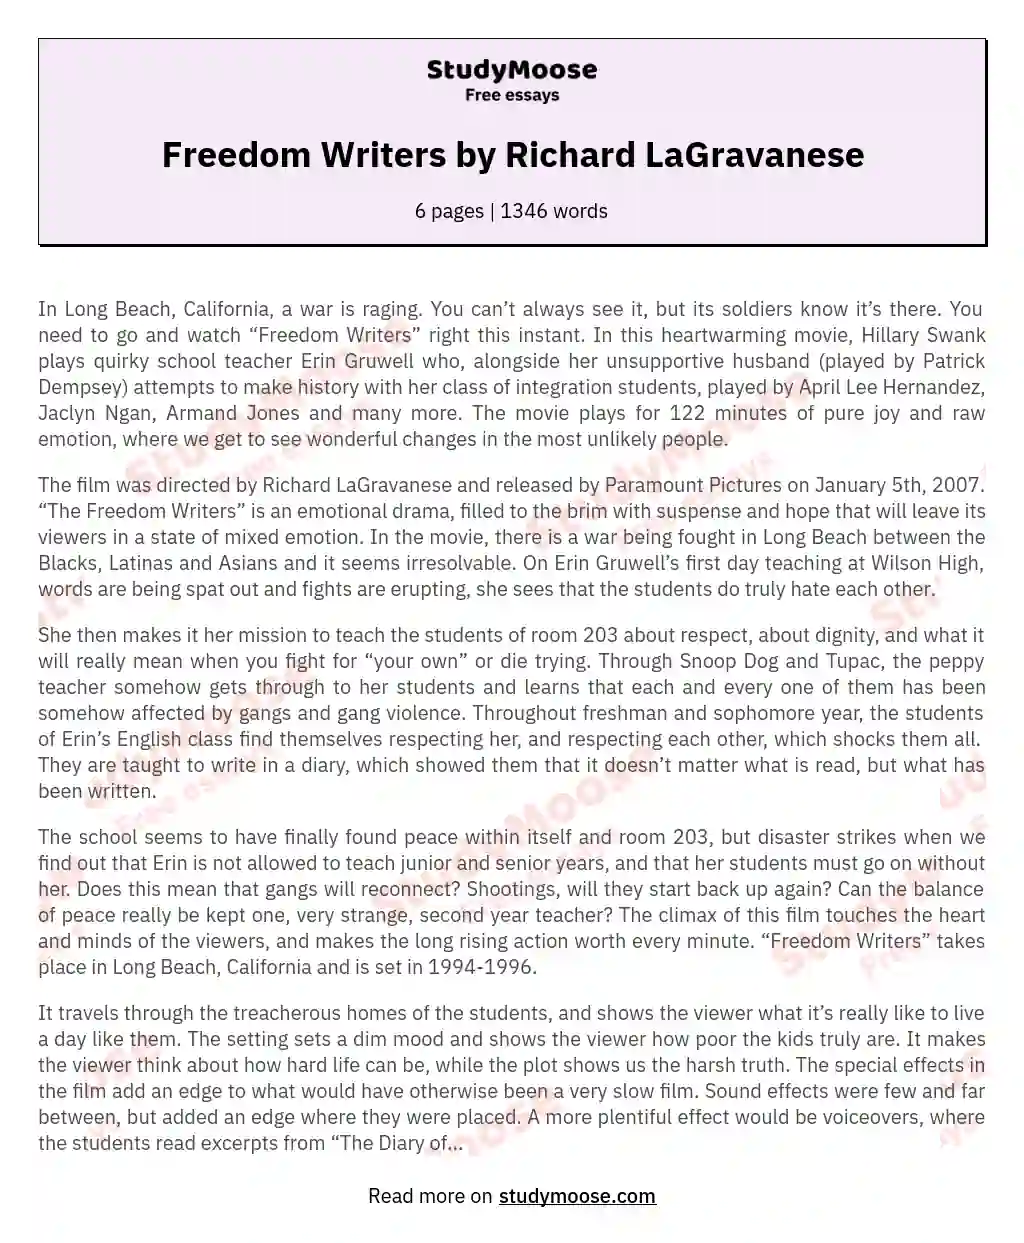 Freedom Writers by Richard LaGravanese